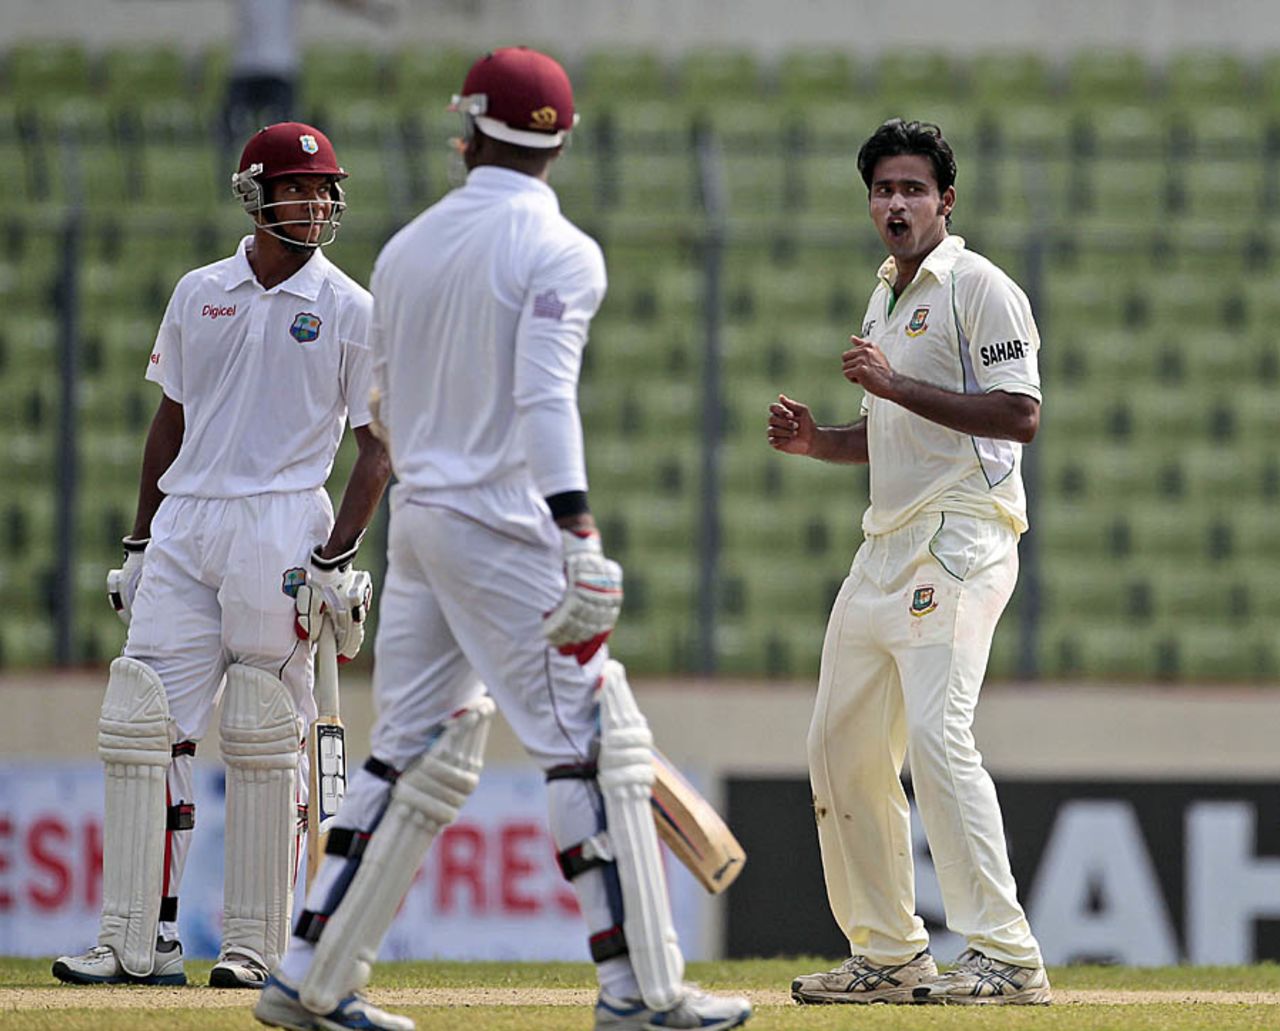 Shahadat Hossain celebrates Kieran Powell's dismissal, Bangladesh v West Indies, 1st Test, Mirpur, 1st day, November 13, 2012